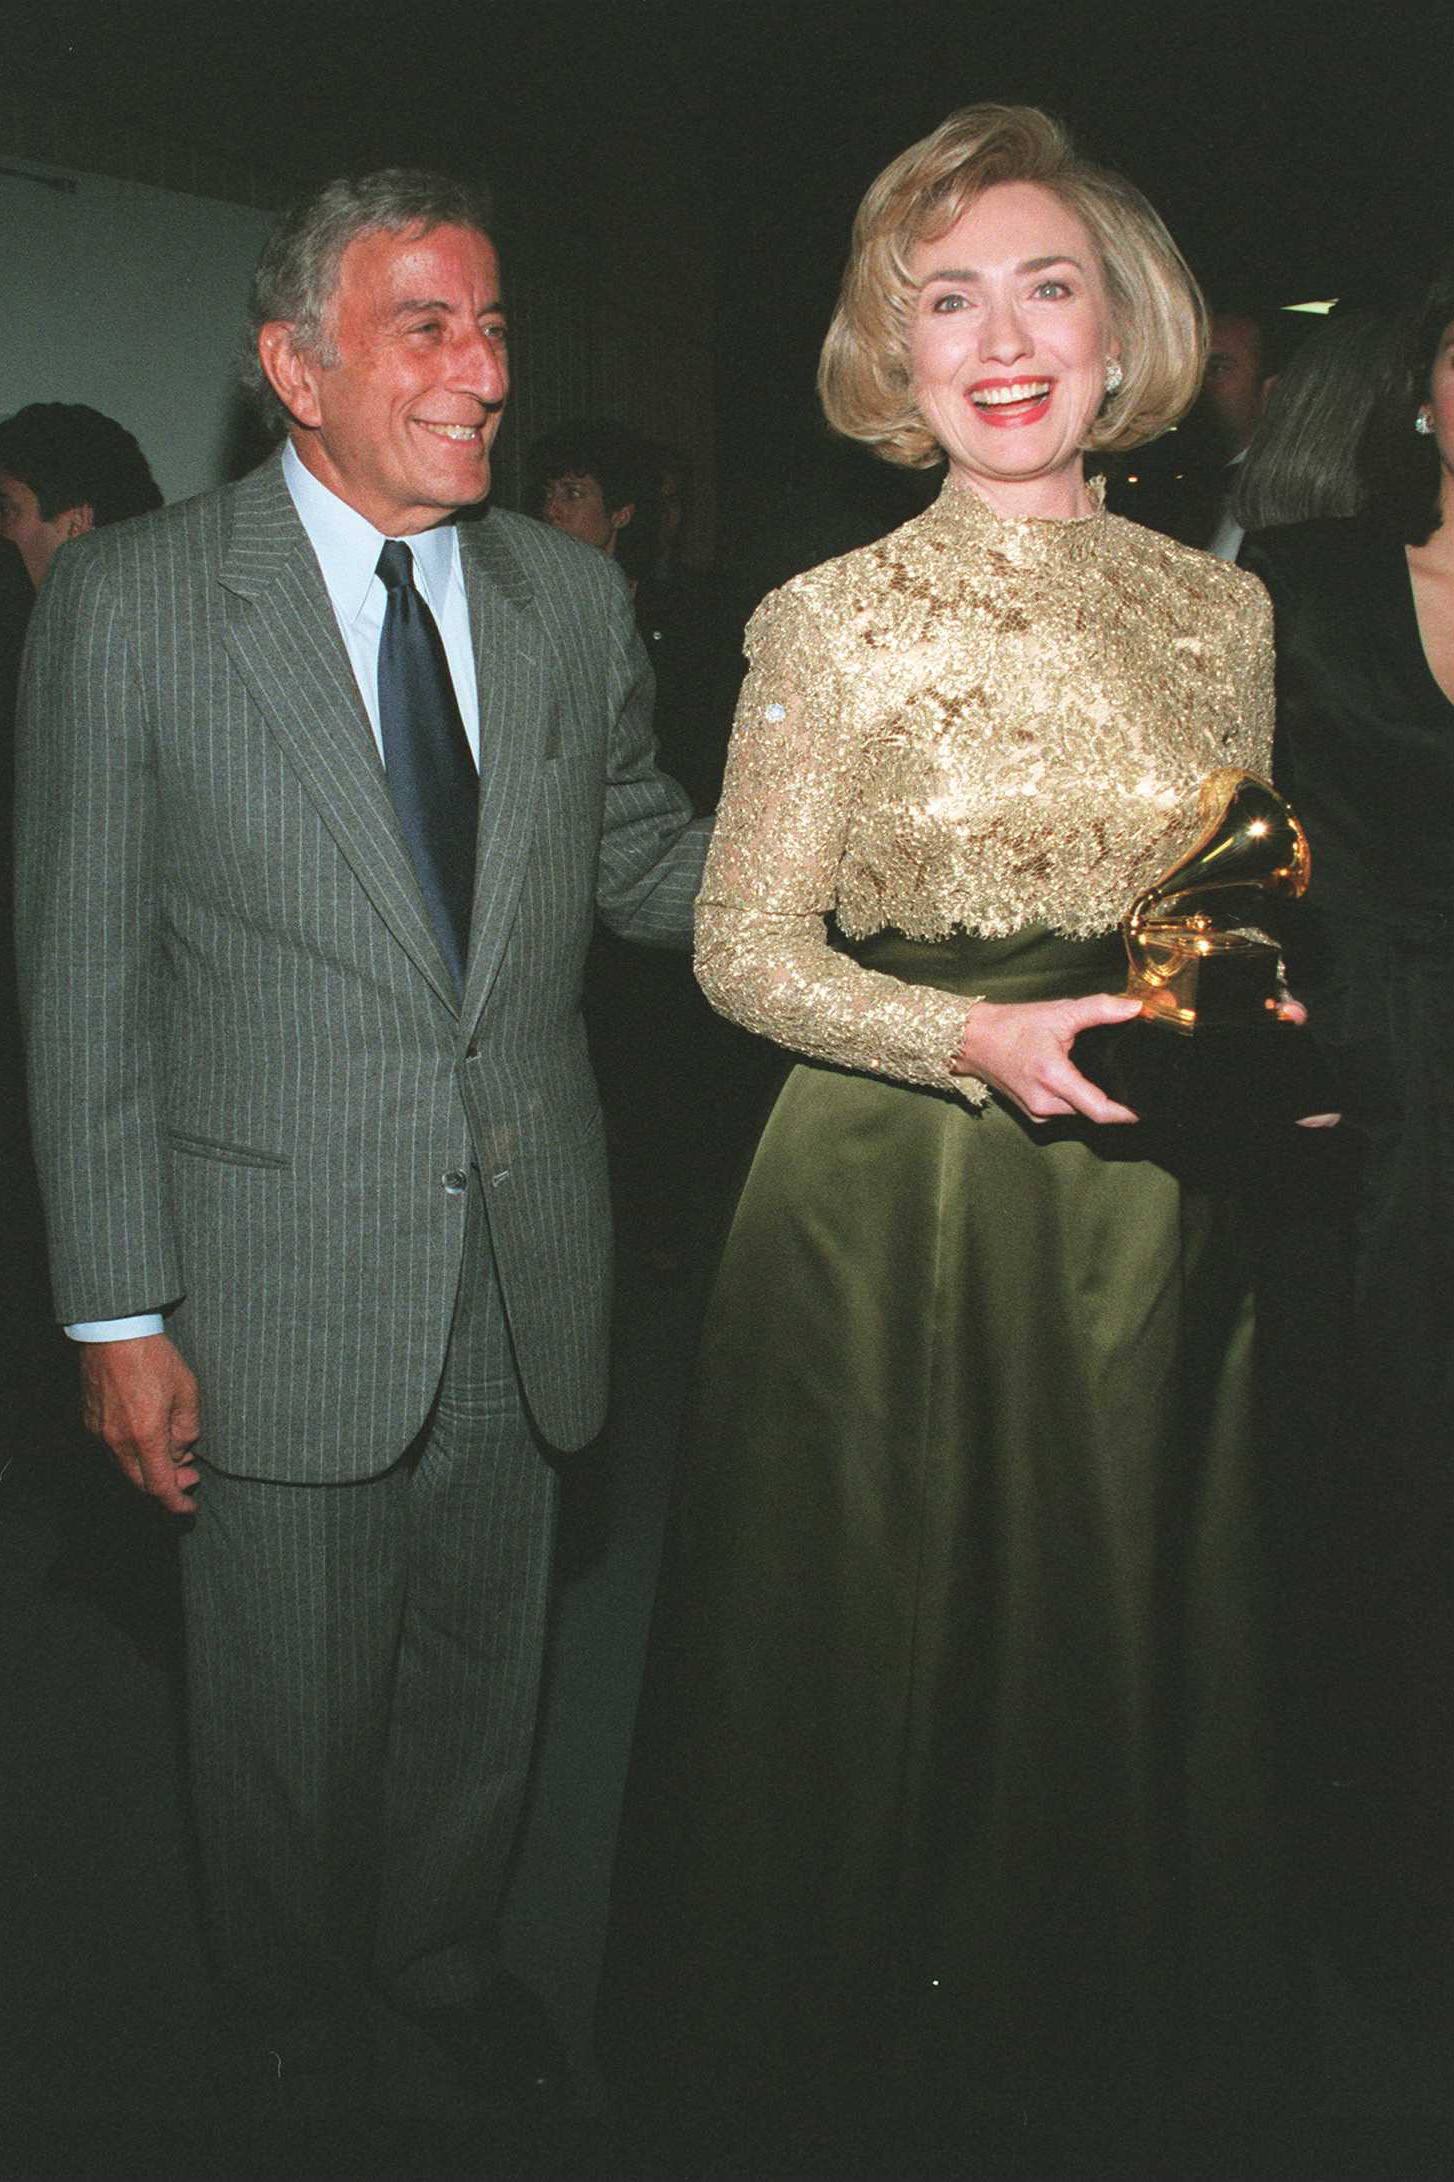 Tony Bennett e a primeira dama na época, Hillary Clinton Grammy Awards de 1997, no Madison Square Garden (Foto: Ron Wolfson / Contributor / Getty Images)